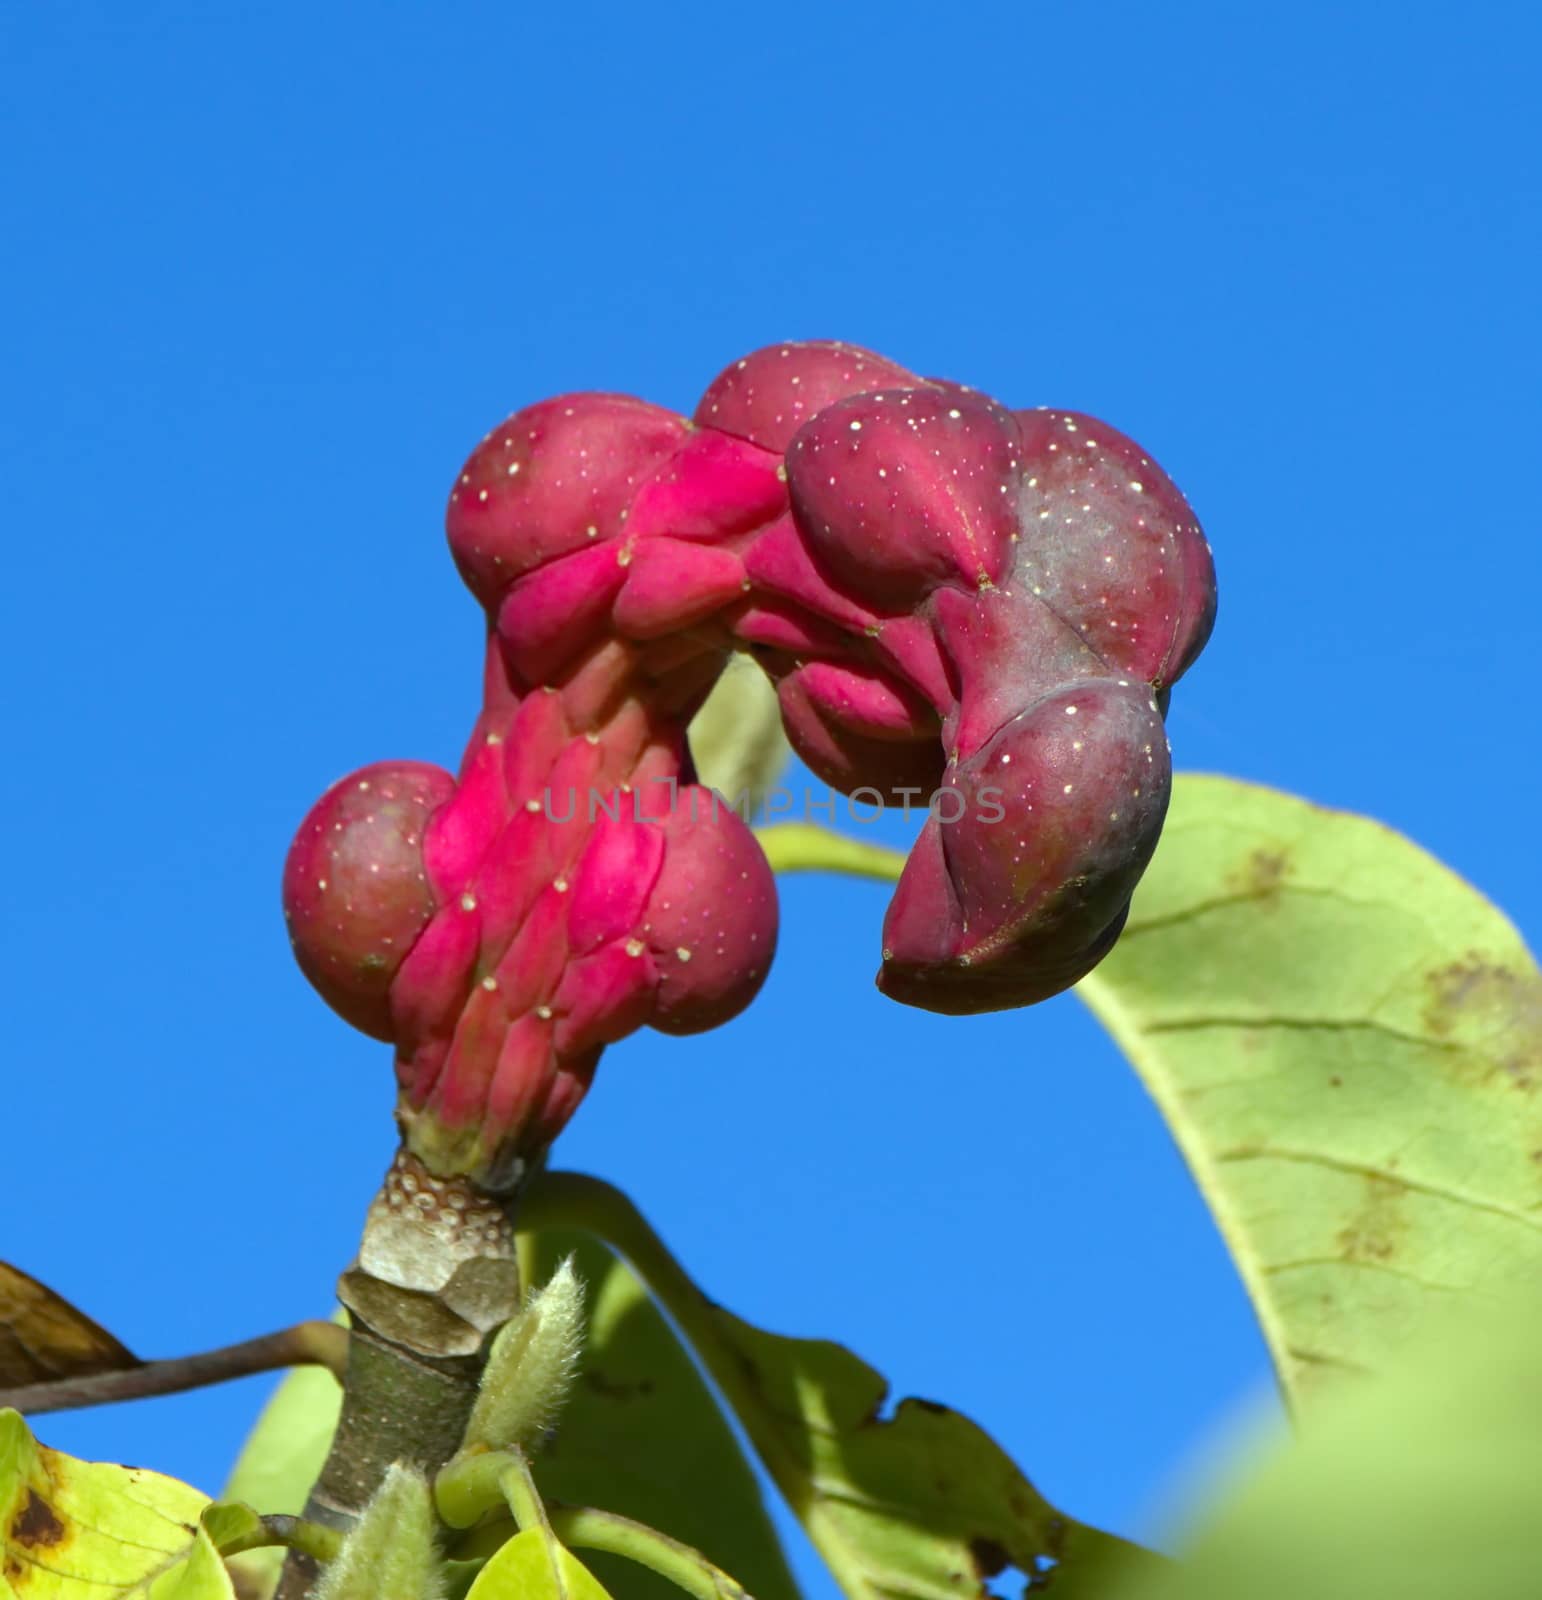 Magnolia Sayonara seed pods in deep blue sky